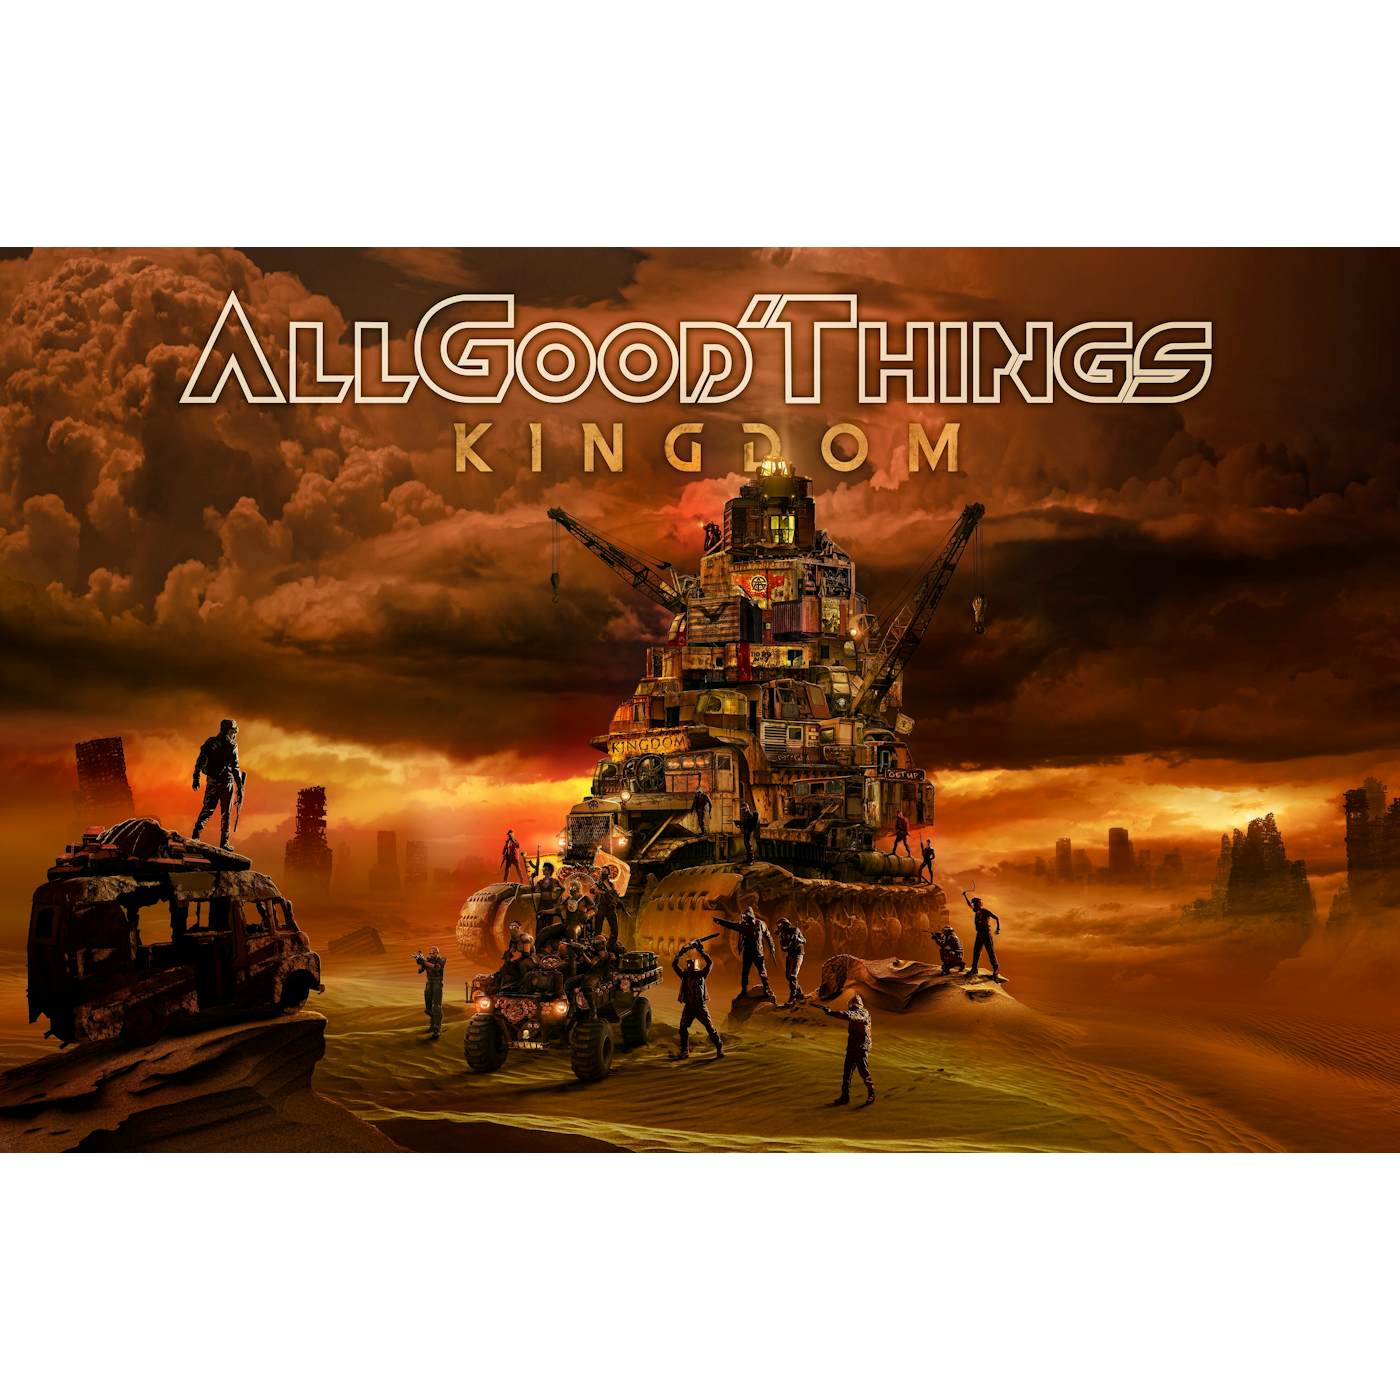 ALL GOOD THINGS - "KINGDOM" POSTER